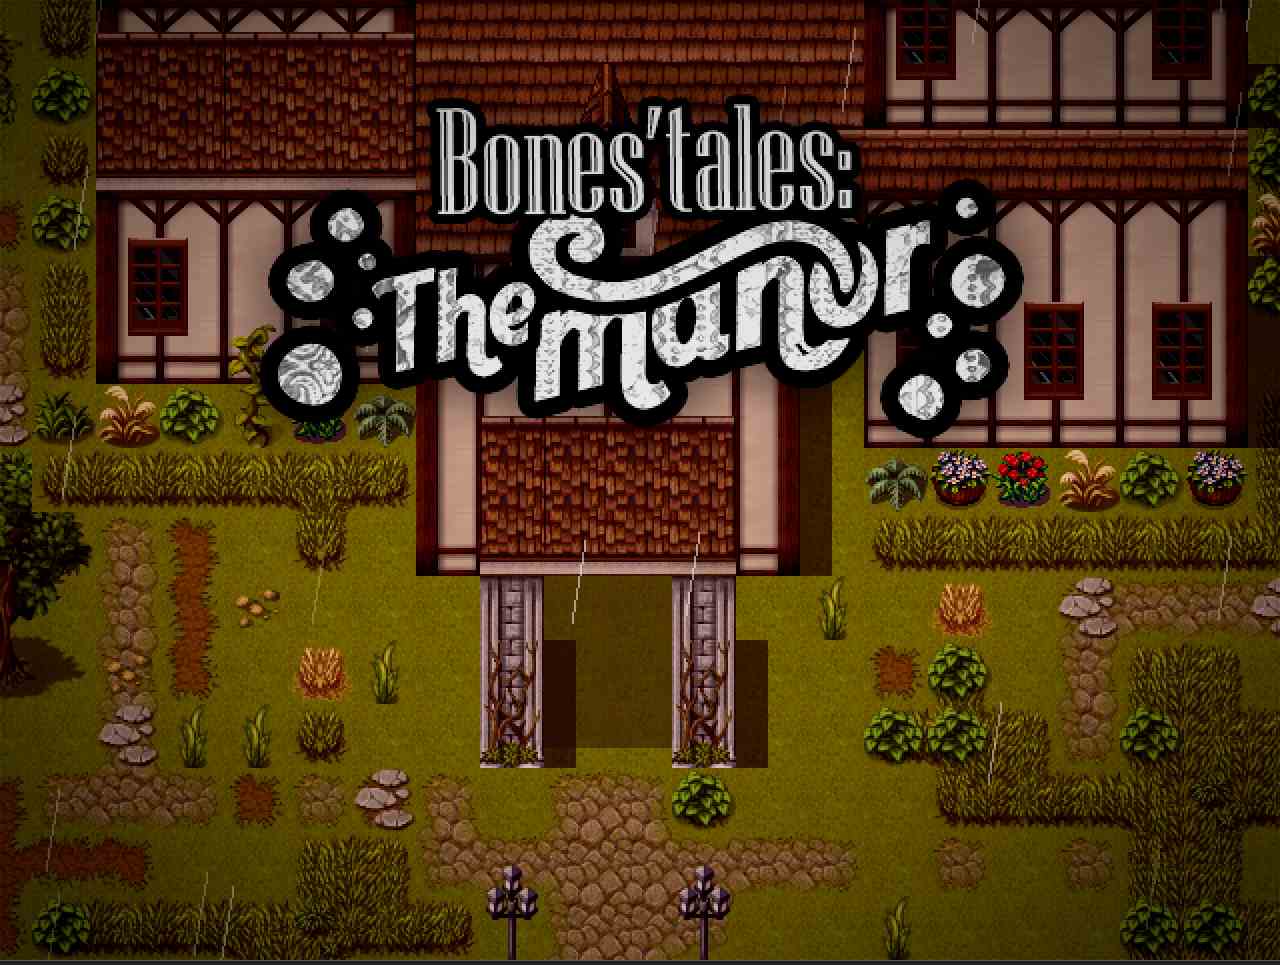 Bones' tales the manor